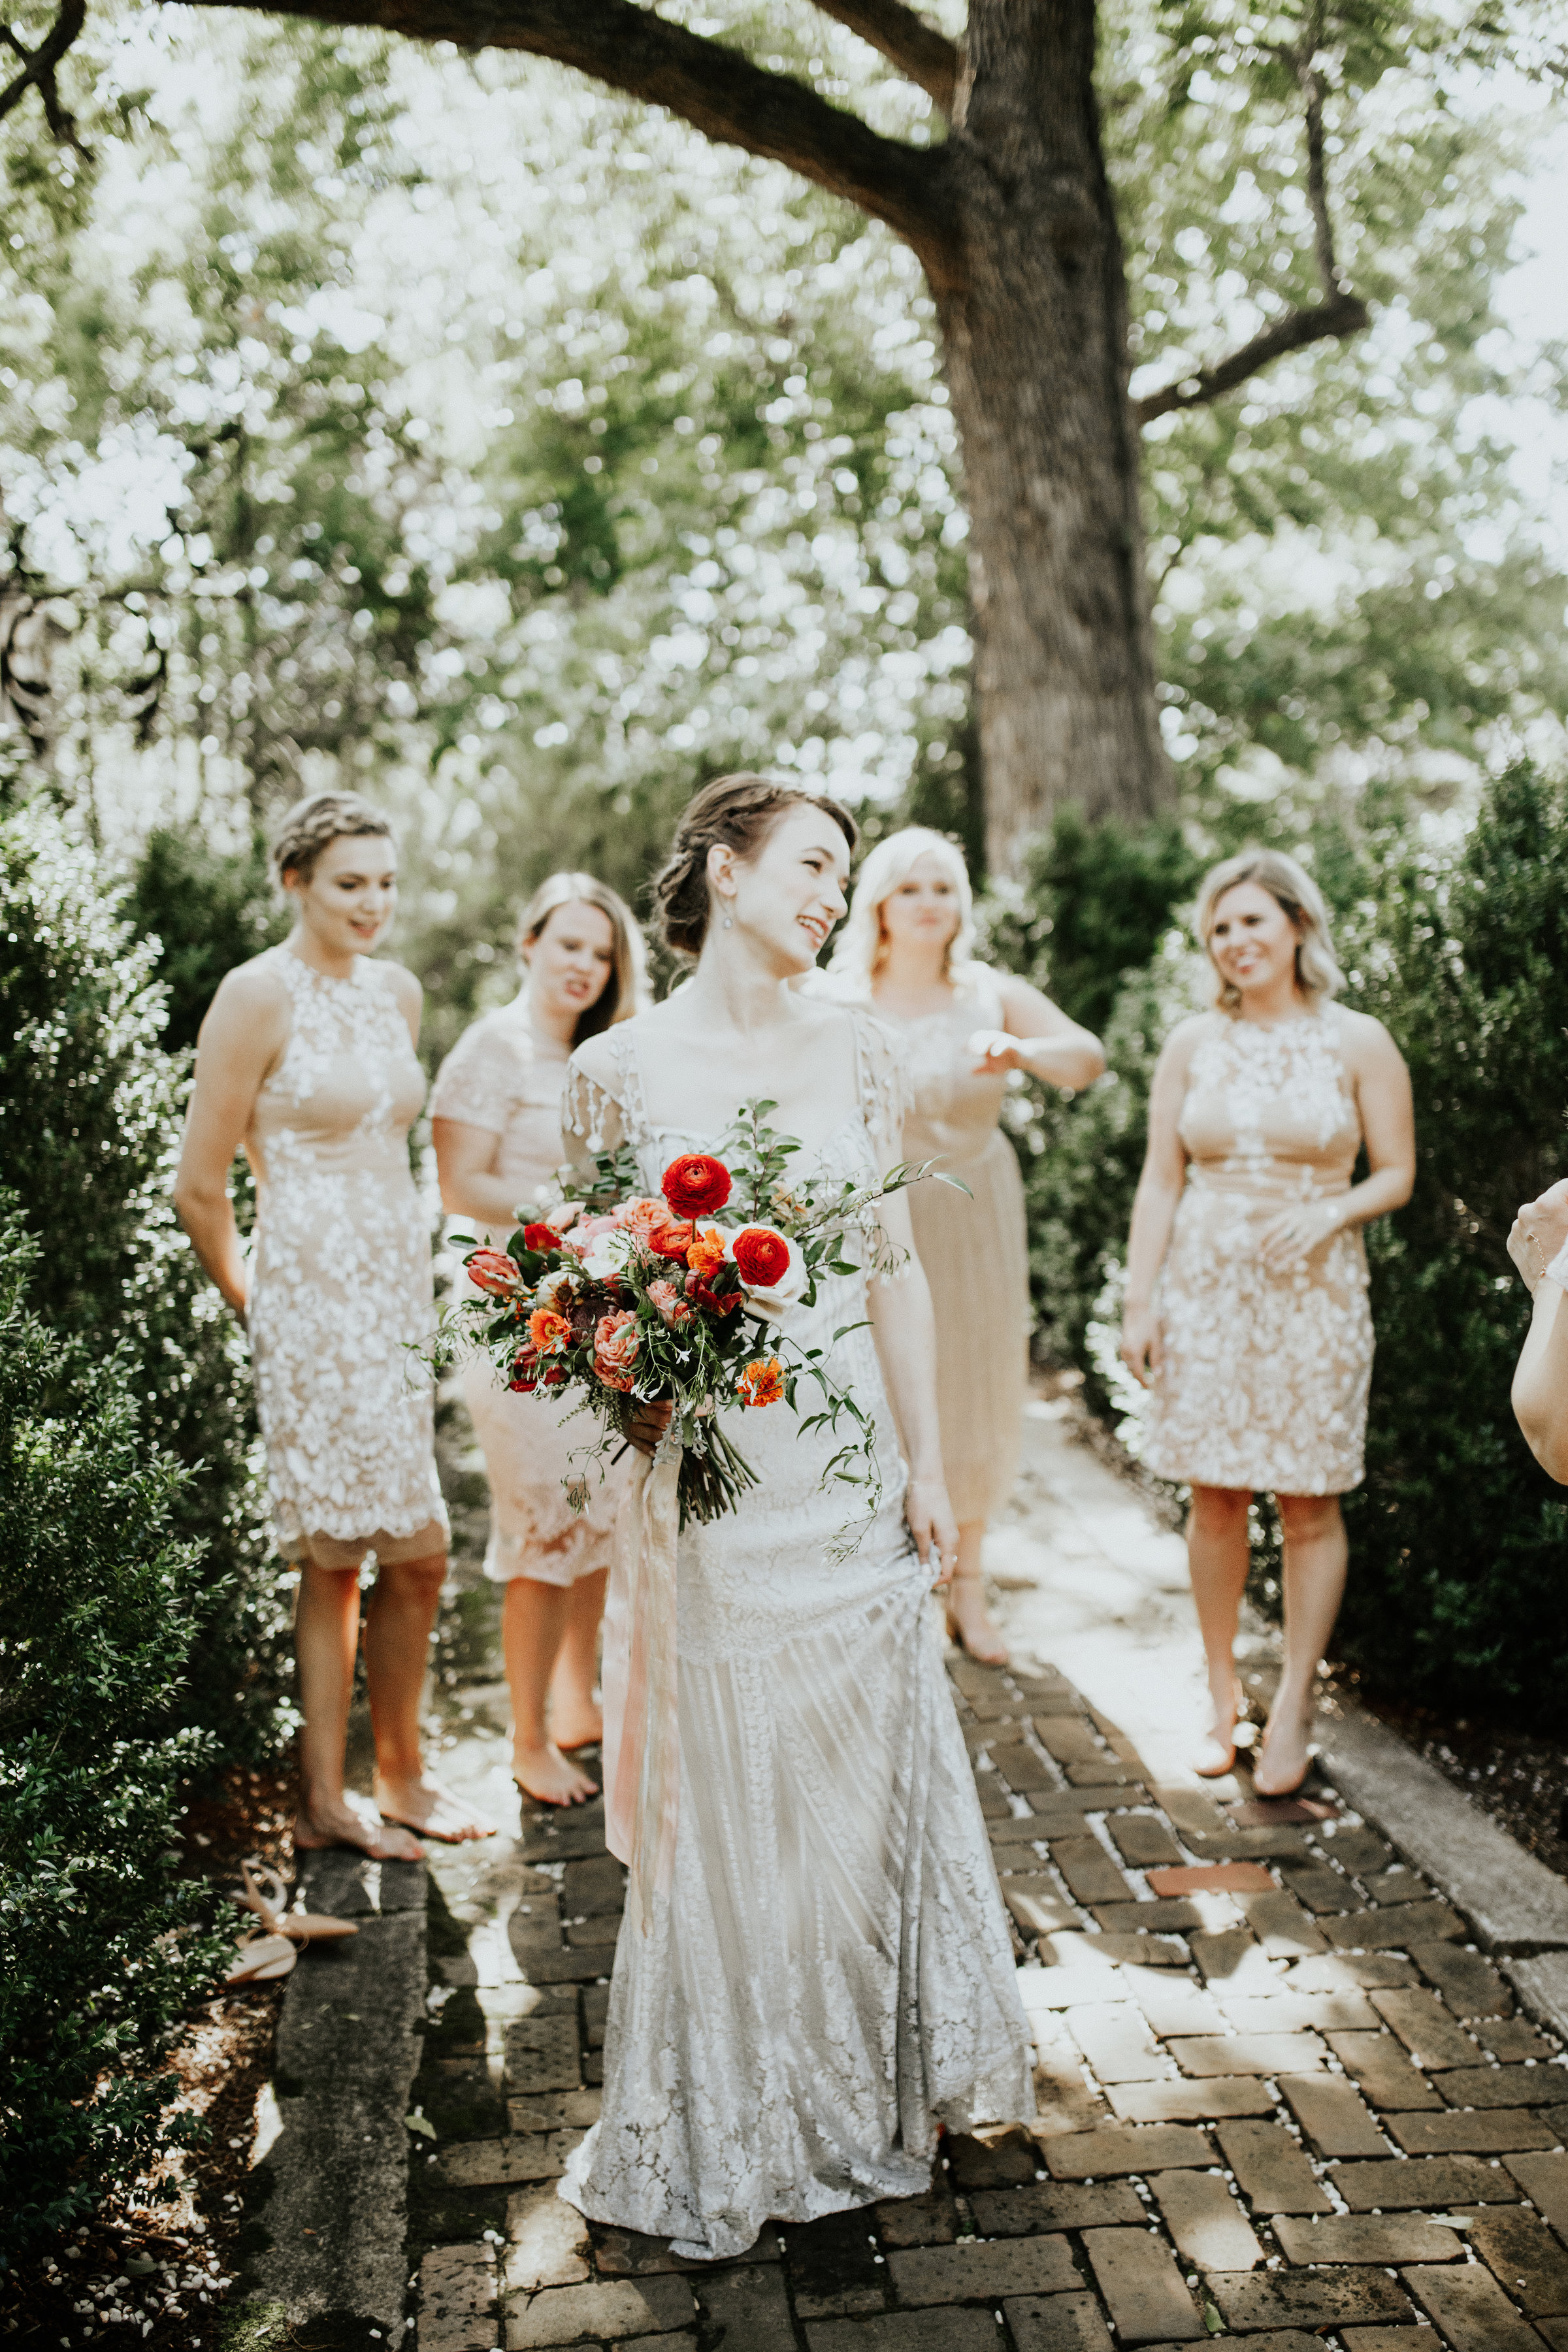 Bridesmaid First Look // Lush, organic wedding florist in Nashville